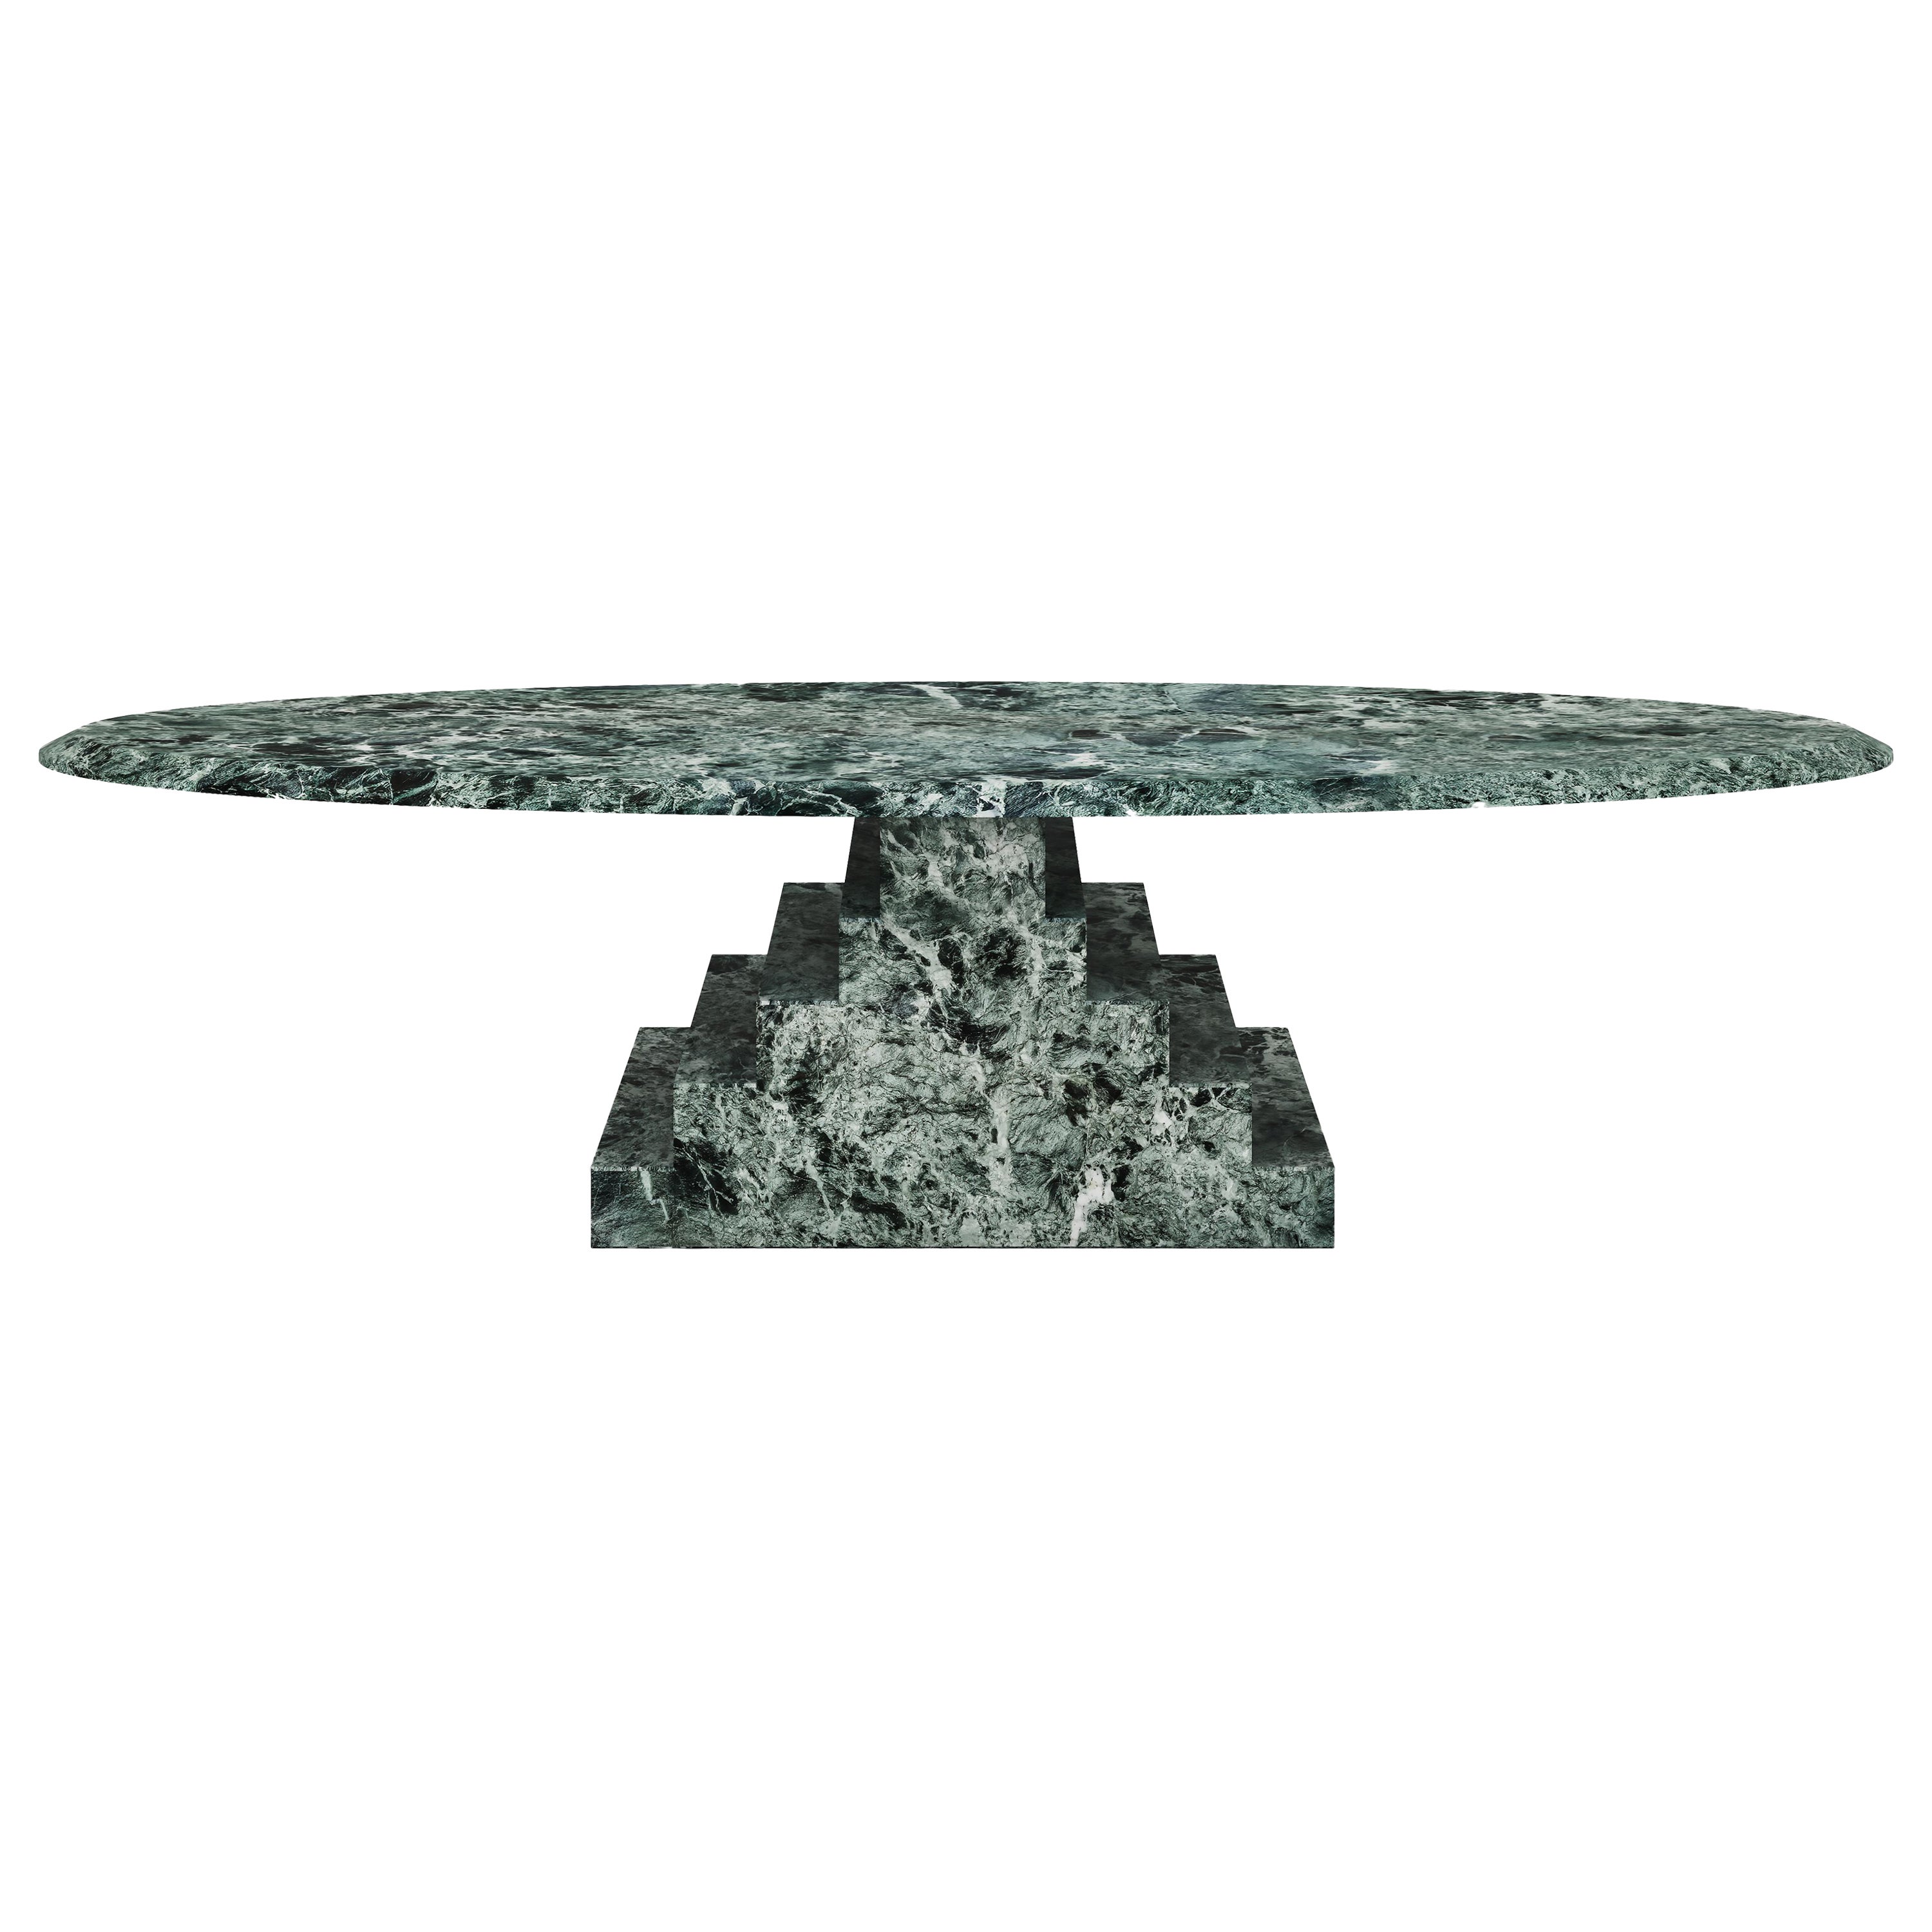 NORDST NIKO Coffee Table, Italian Green Marble, Danish Modern Design , New For Sale